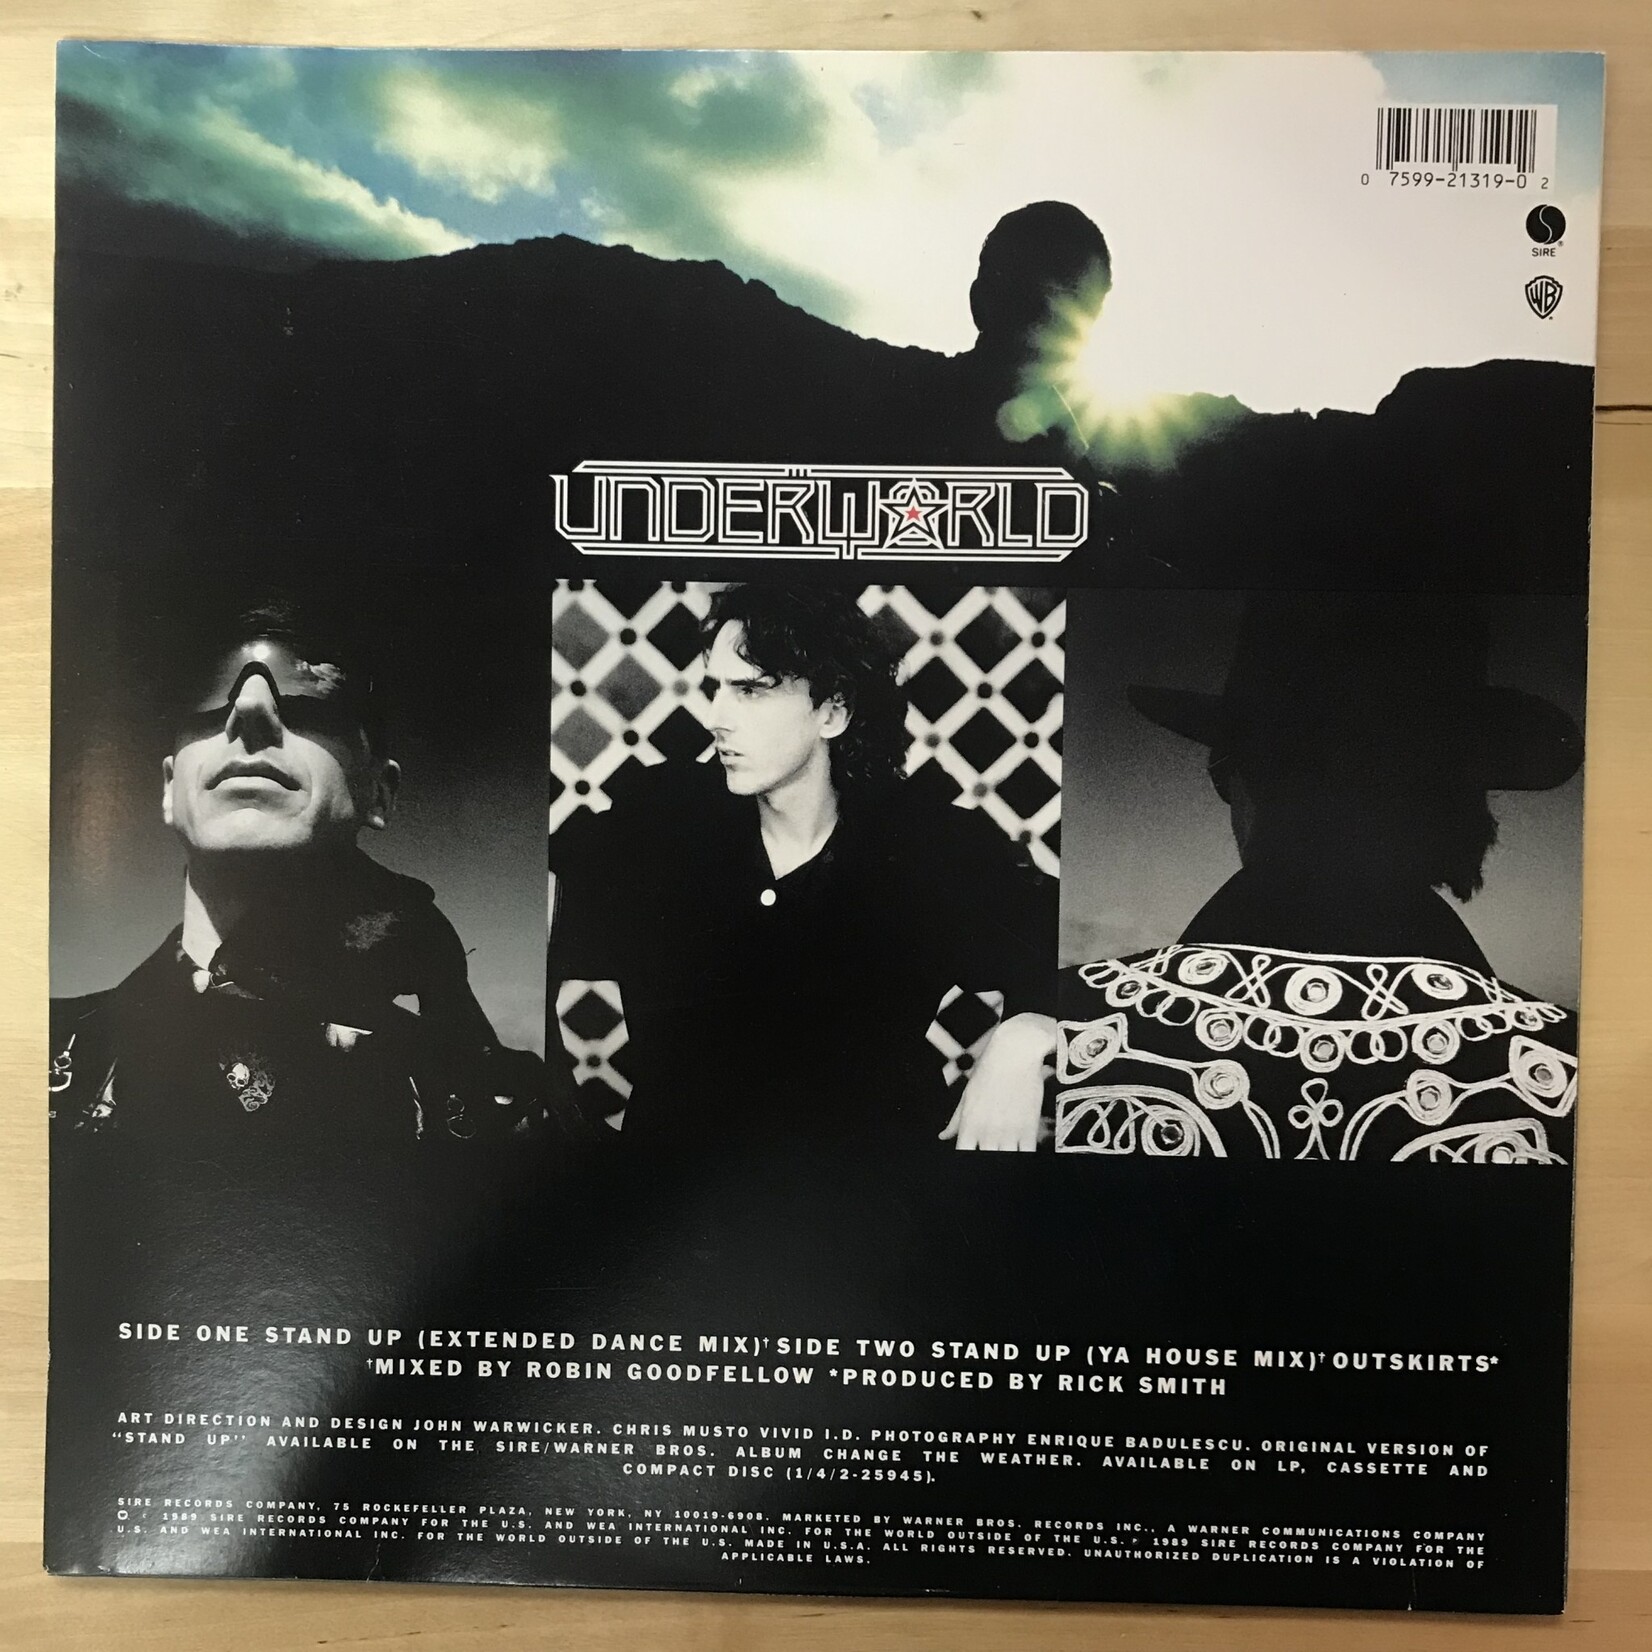 Underworld - Stand Up - 0 21319 - Vinyl 12-Inch Single (USED)